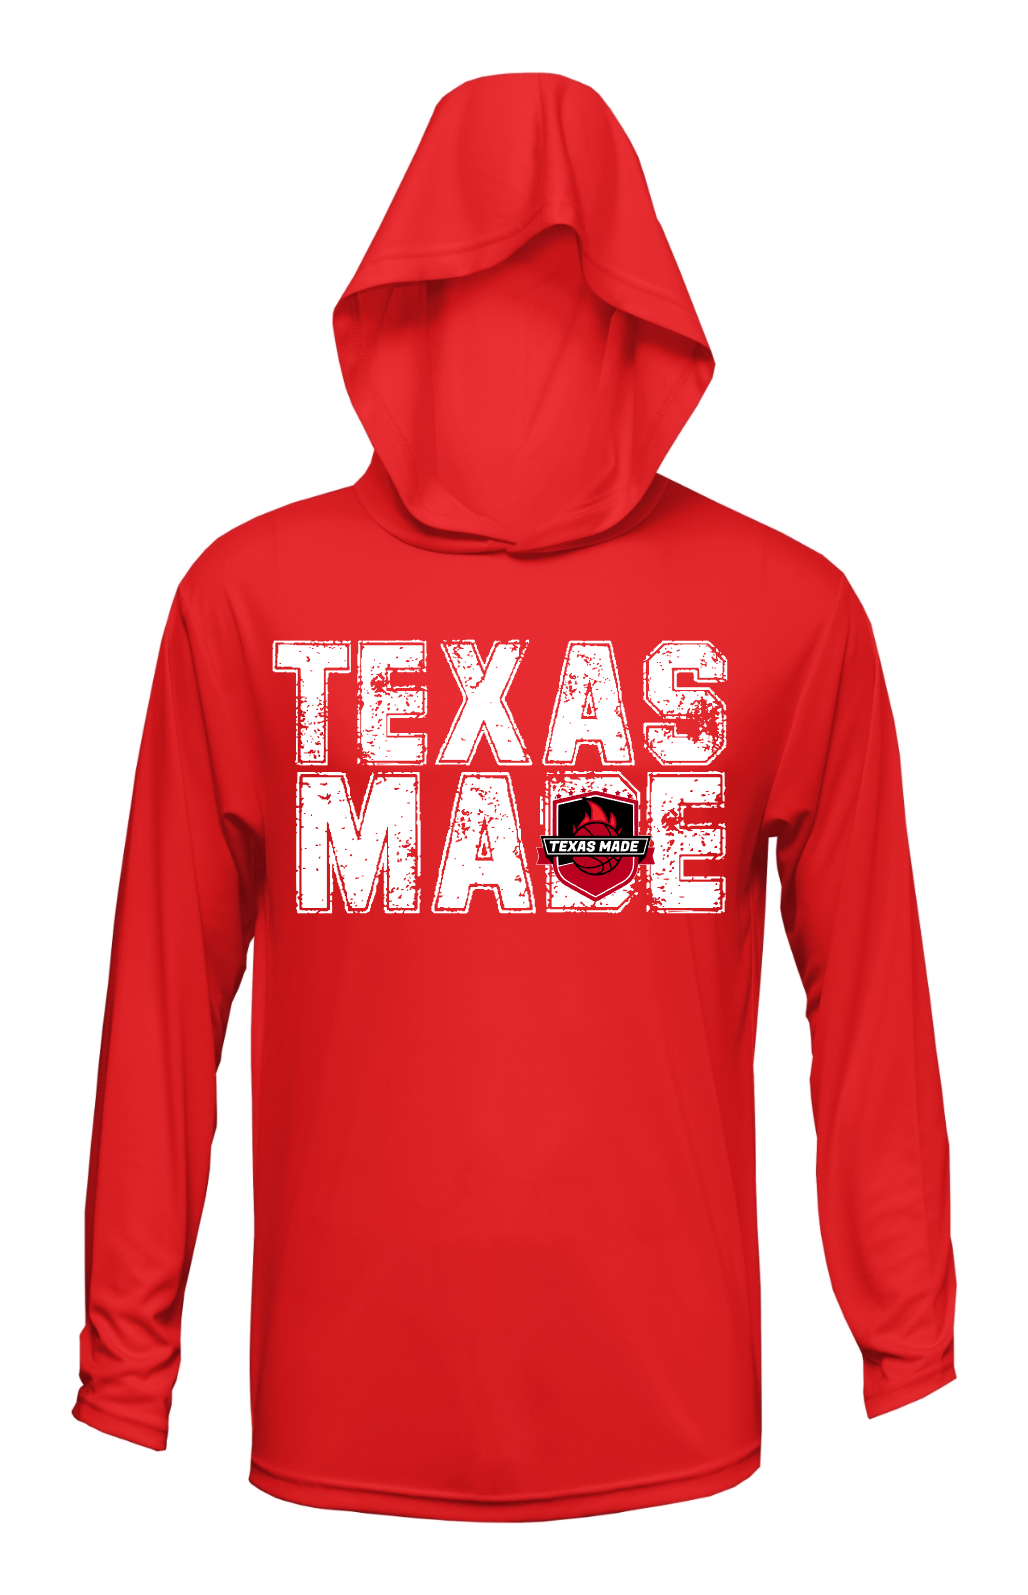 Texas Made- TEXAS MADE -Red Hooded Longsleeve Tee